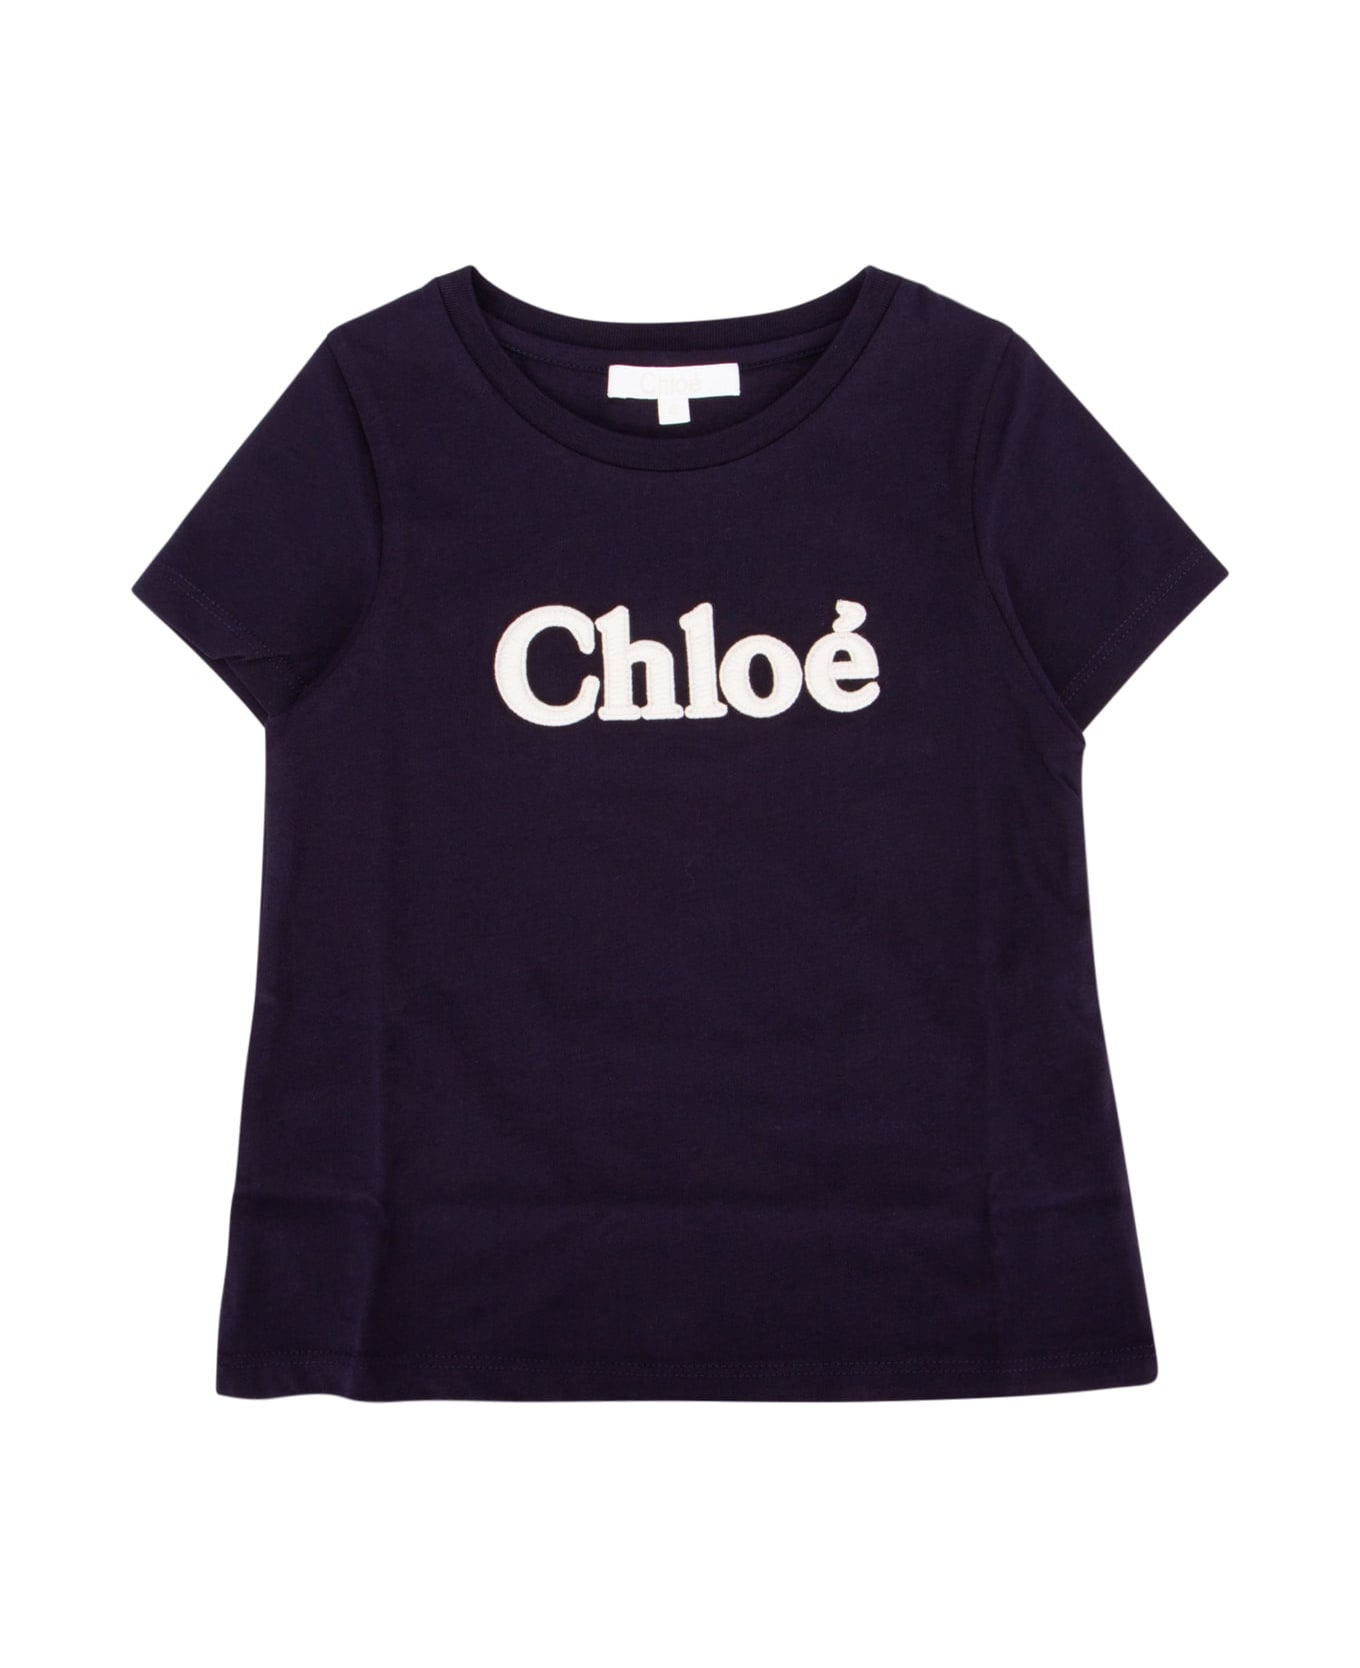 Chloé T-shirt - MARINE